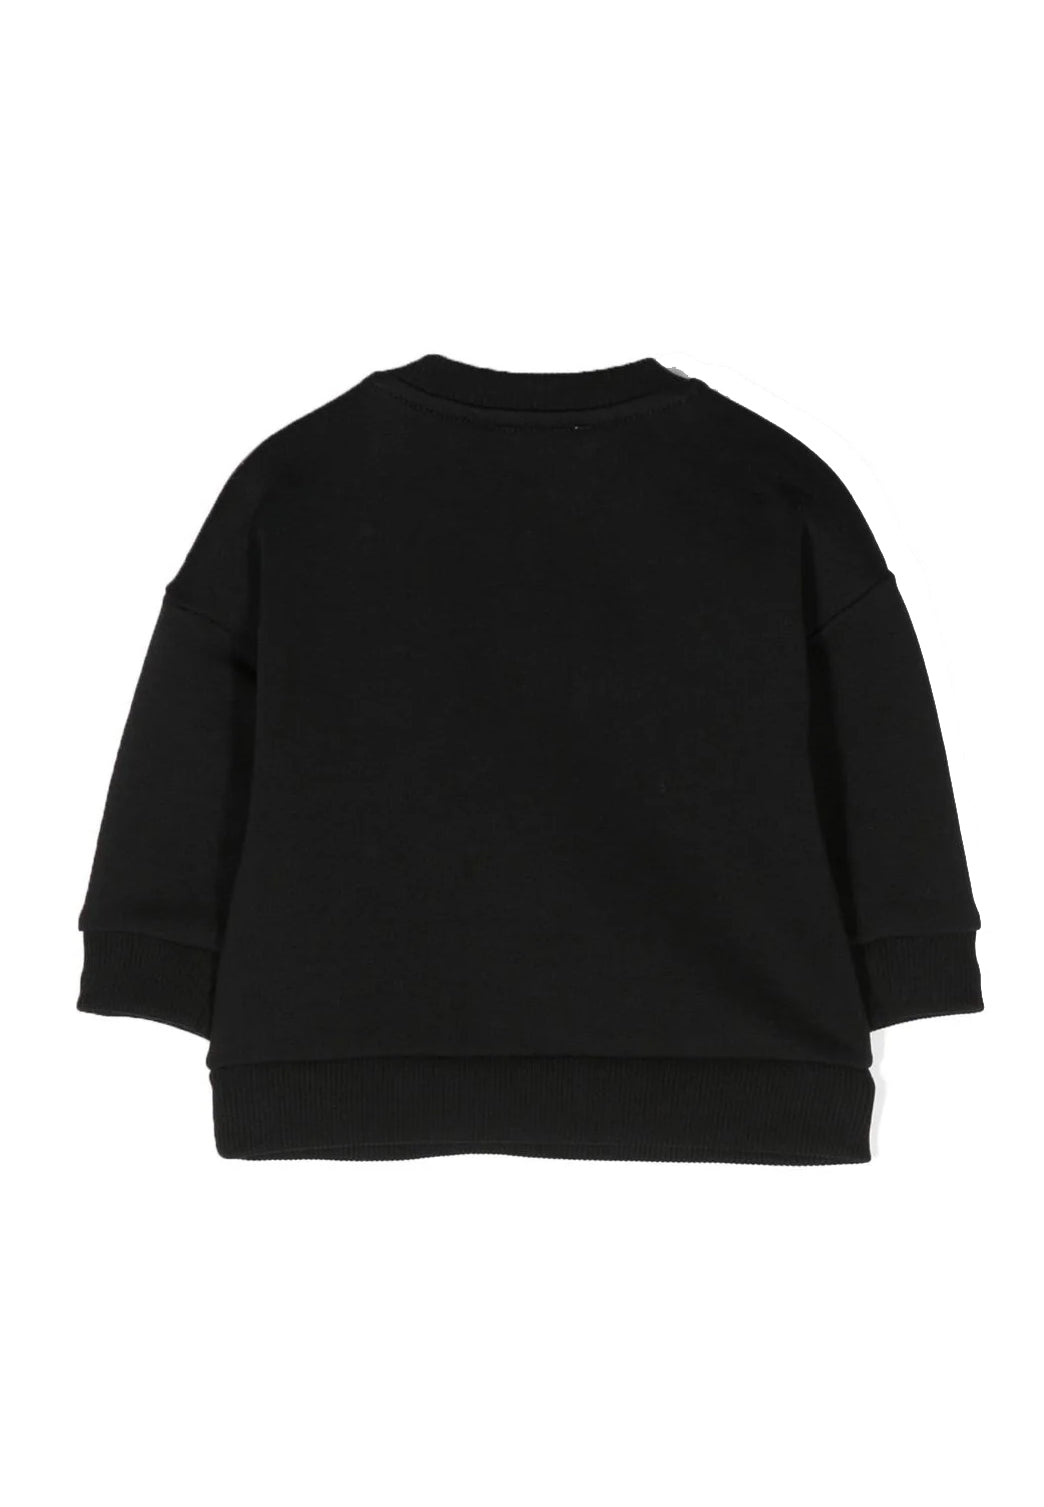 Black crew-neck sweatshirt for newborn